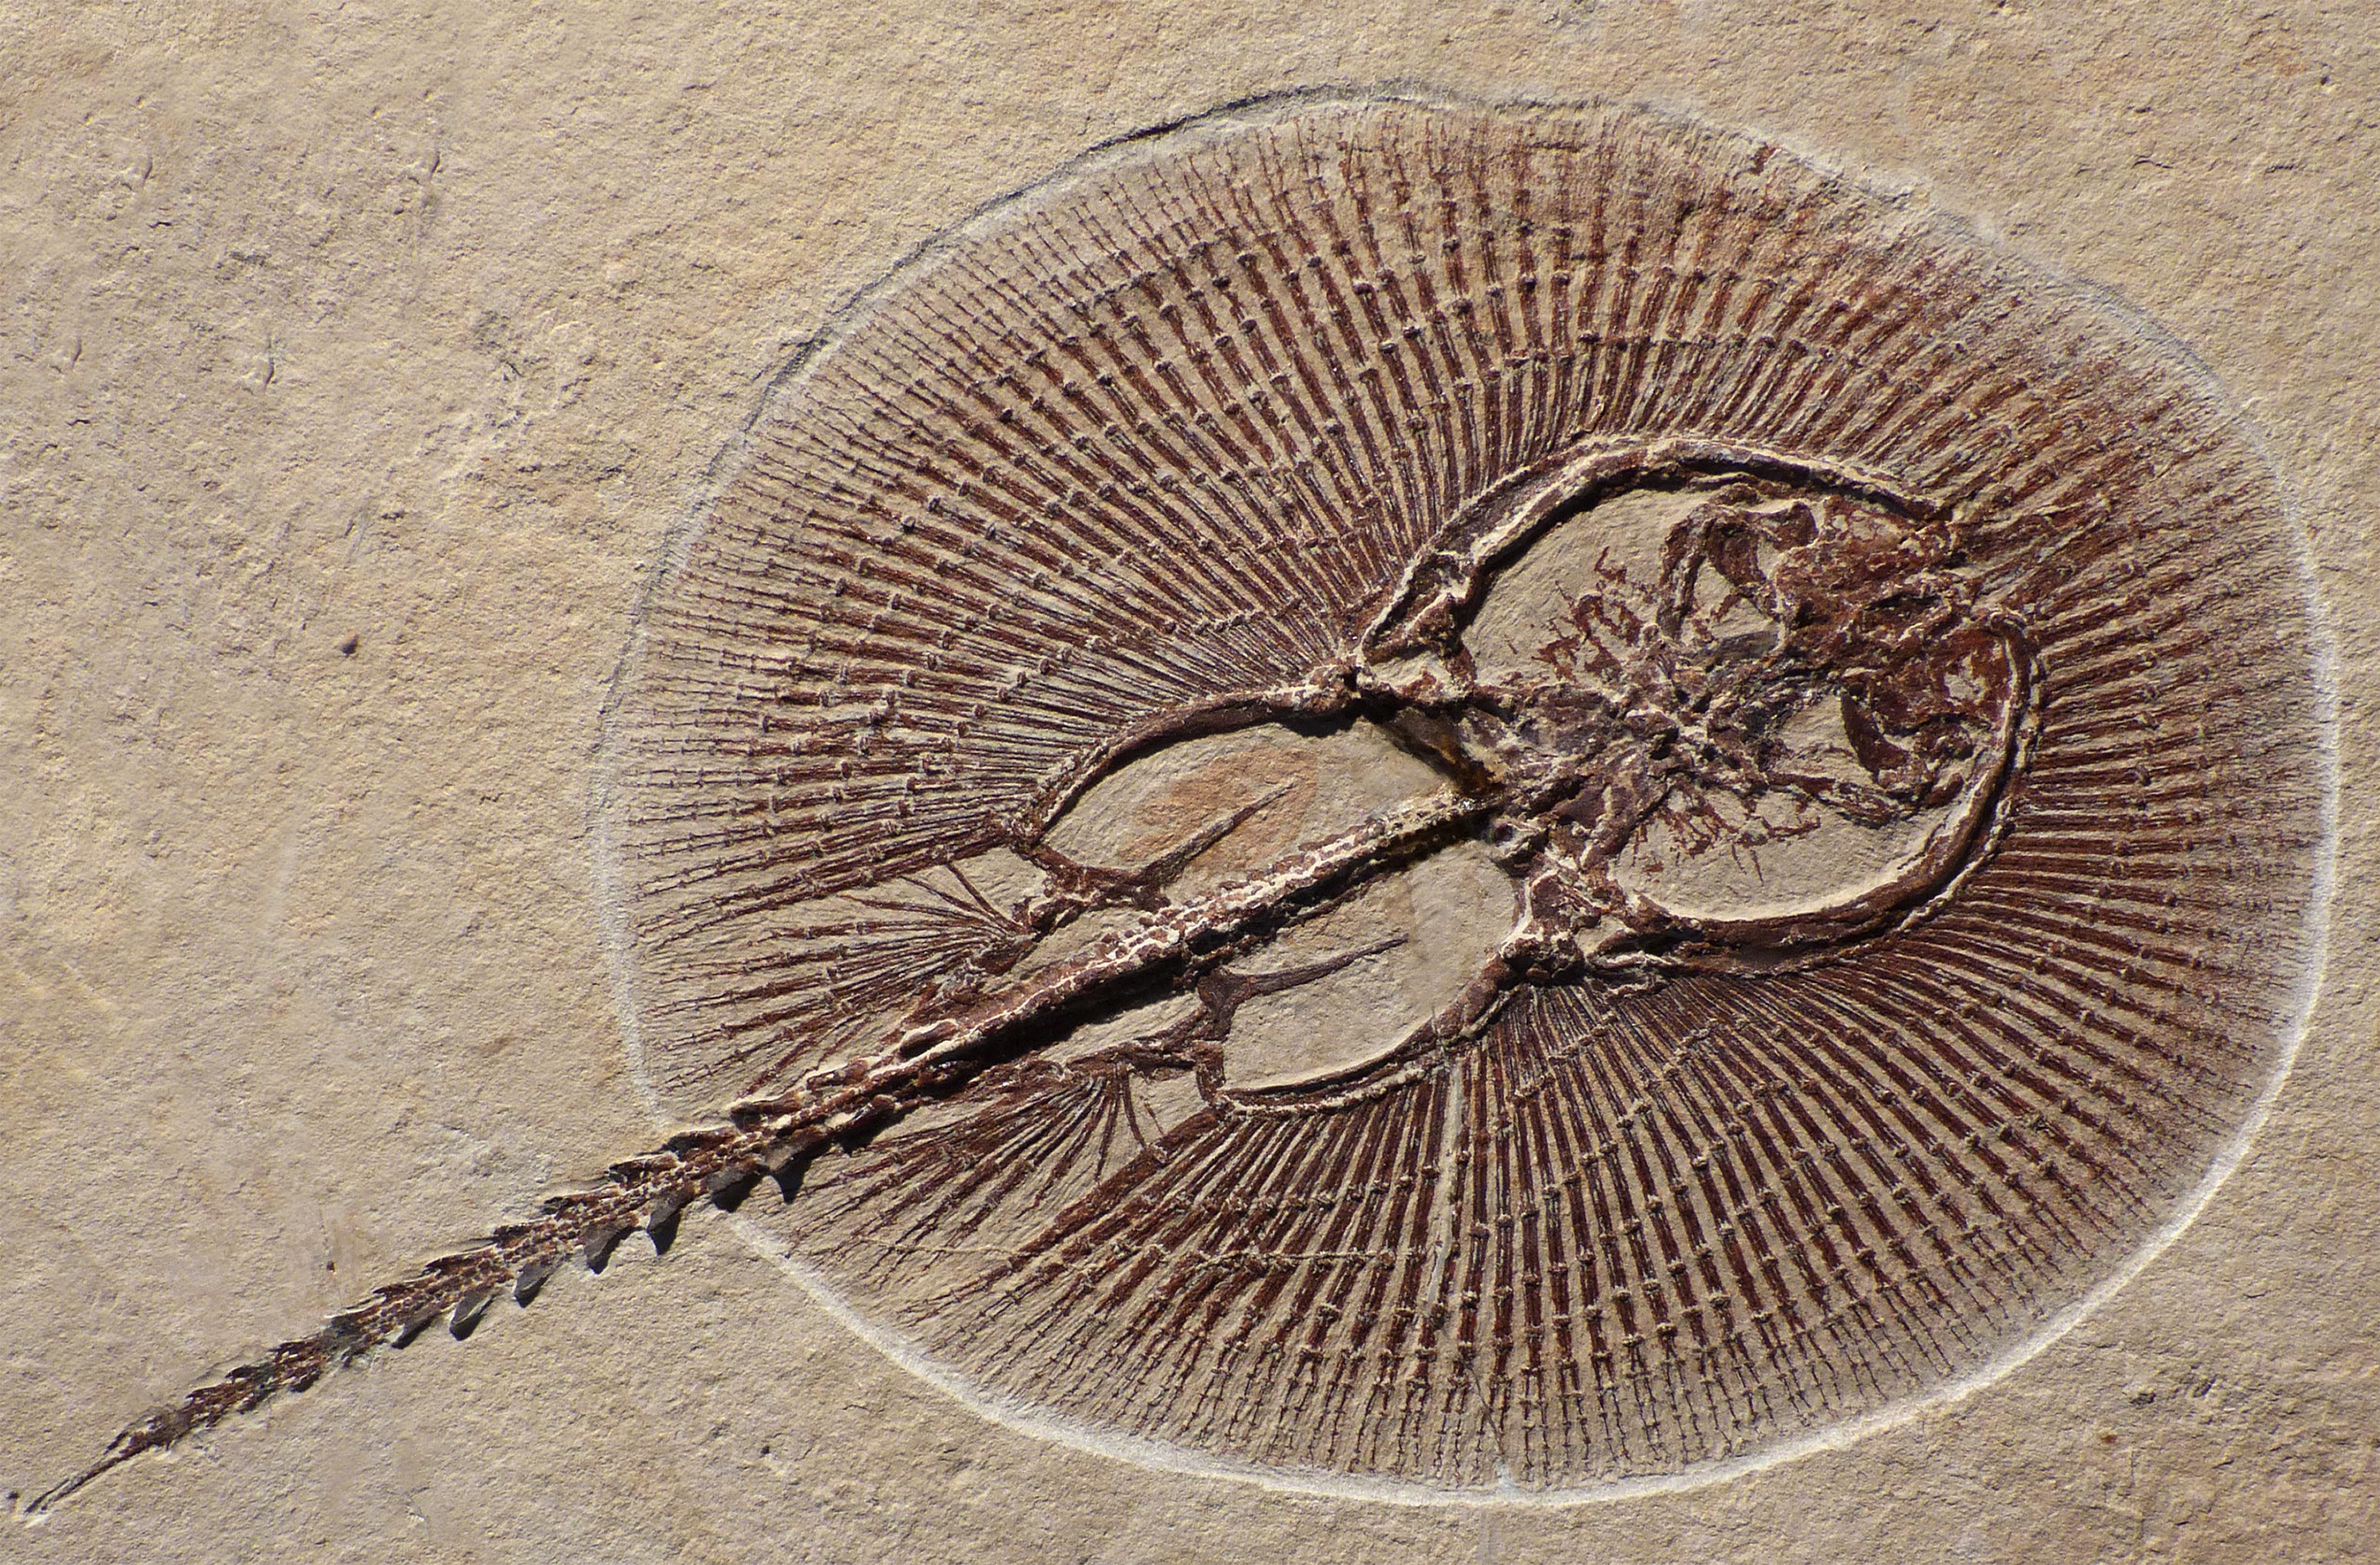 Libanon fossils